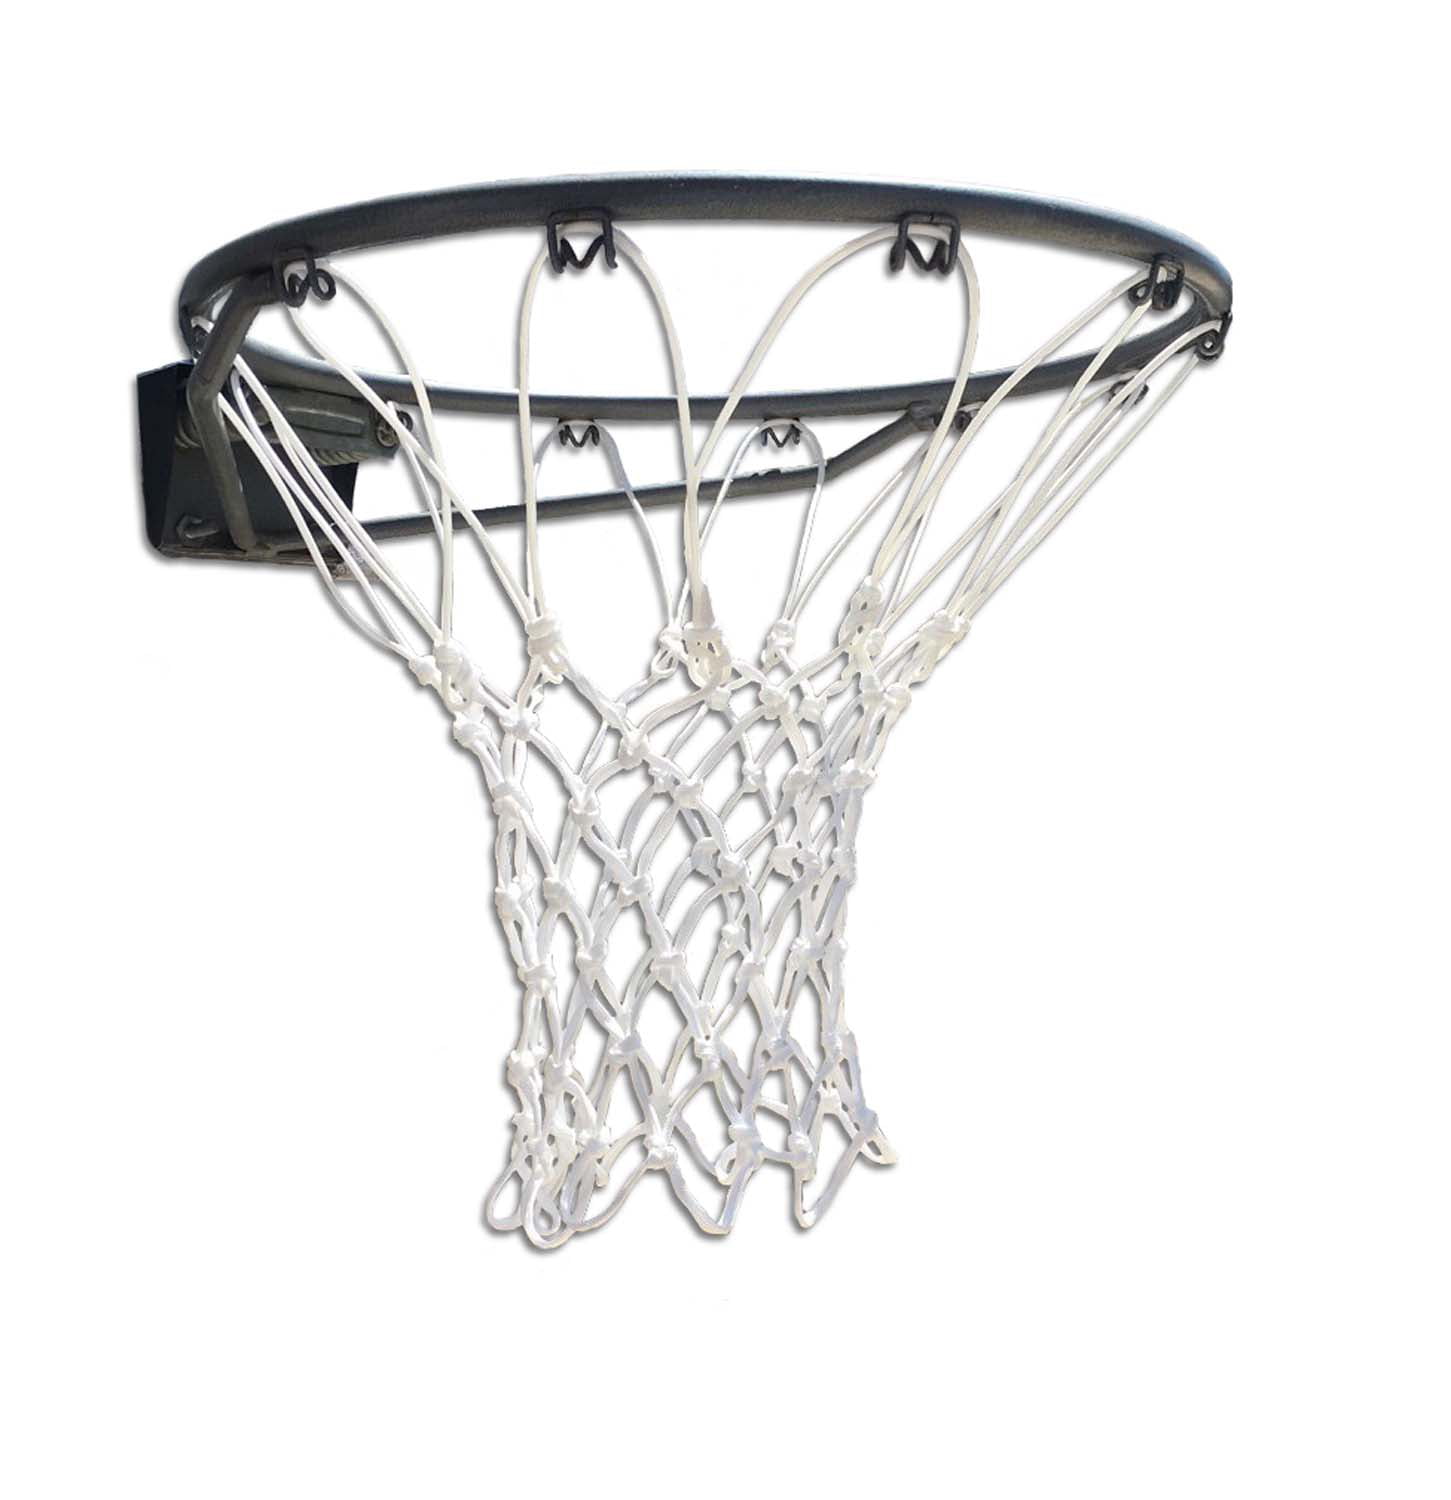 Franklin Sports 1648 RWB 12 Loop Basketball Net for sale online 